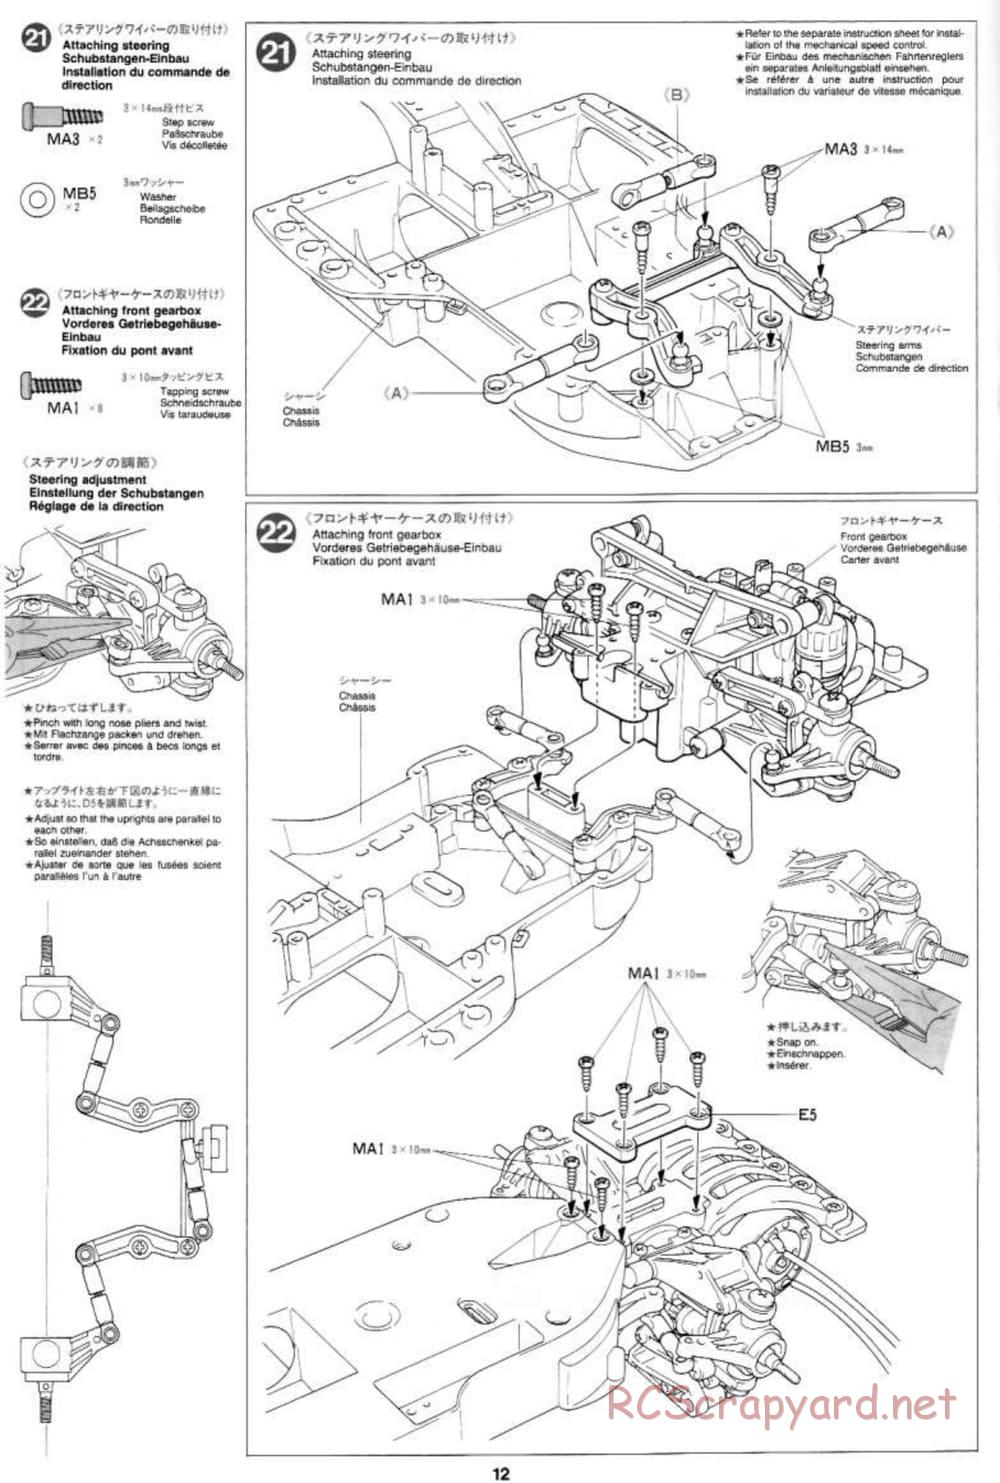 Tamiya - Subaru Impreza WRC 97 - TA-03F Chassis - Manual - Page 12